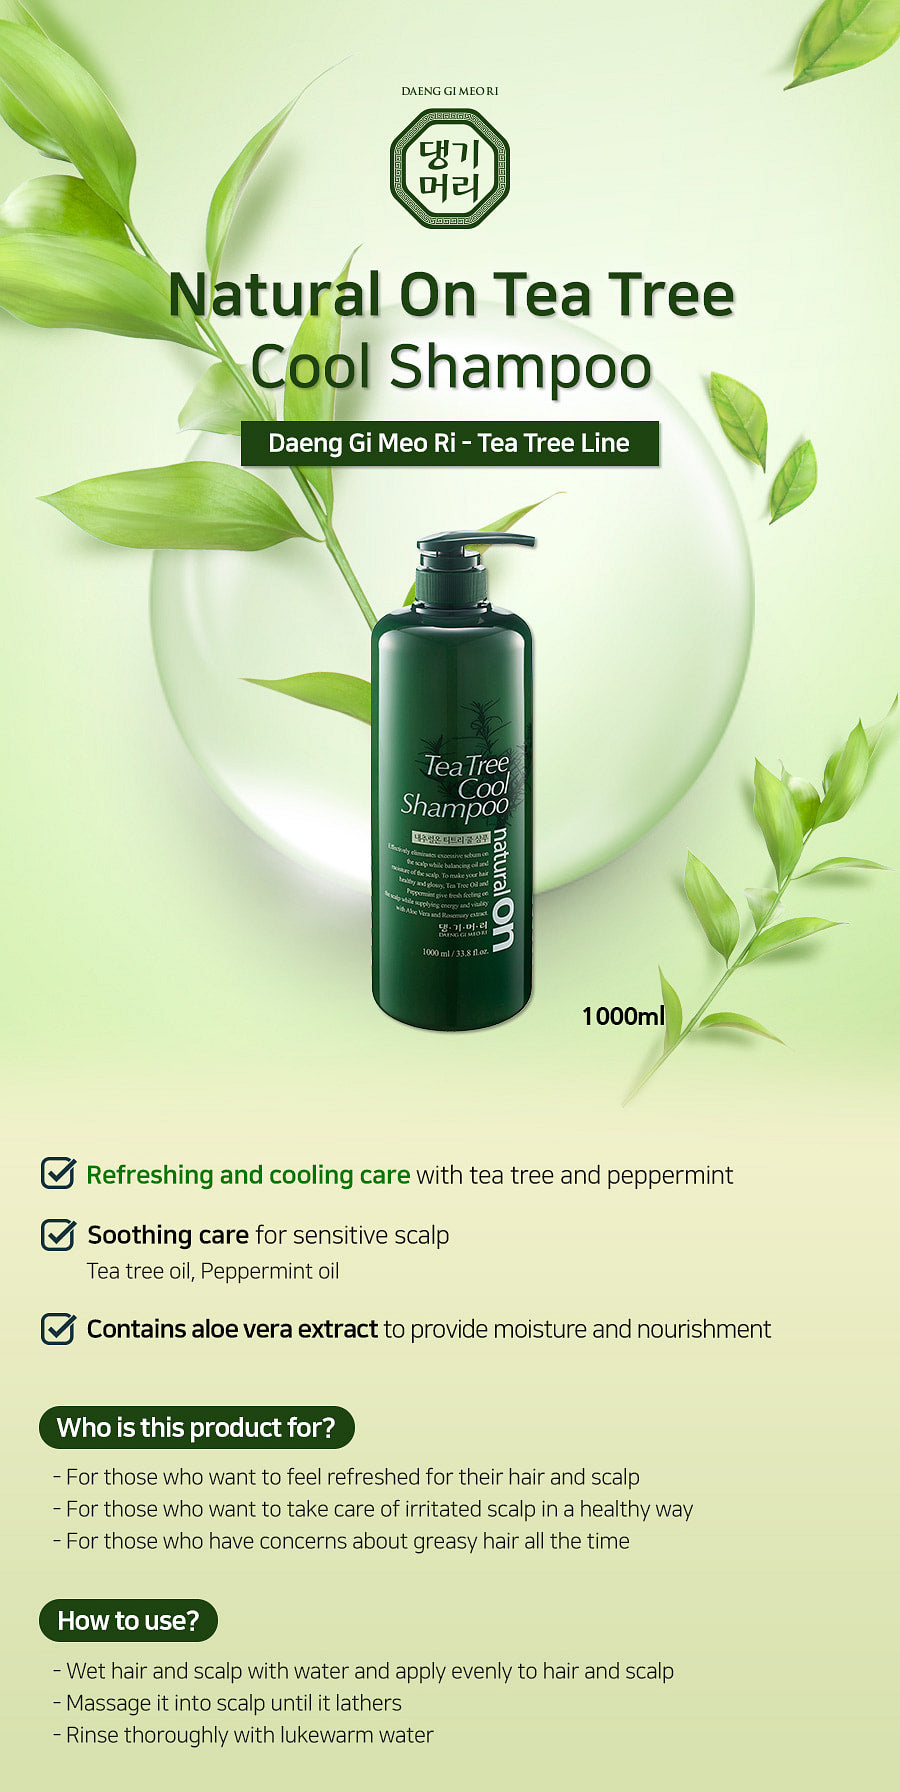 Daeng Gi Meo Ri Natural on Tea Tree Cool Shampoo